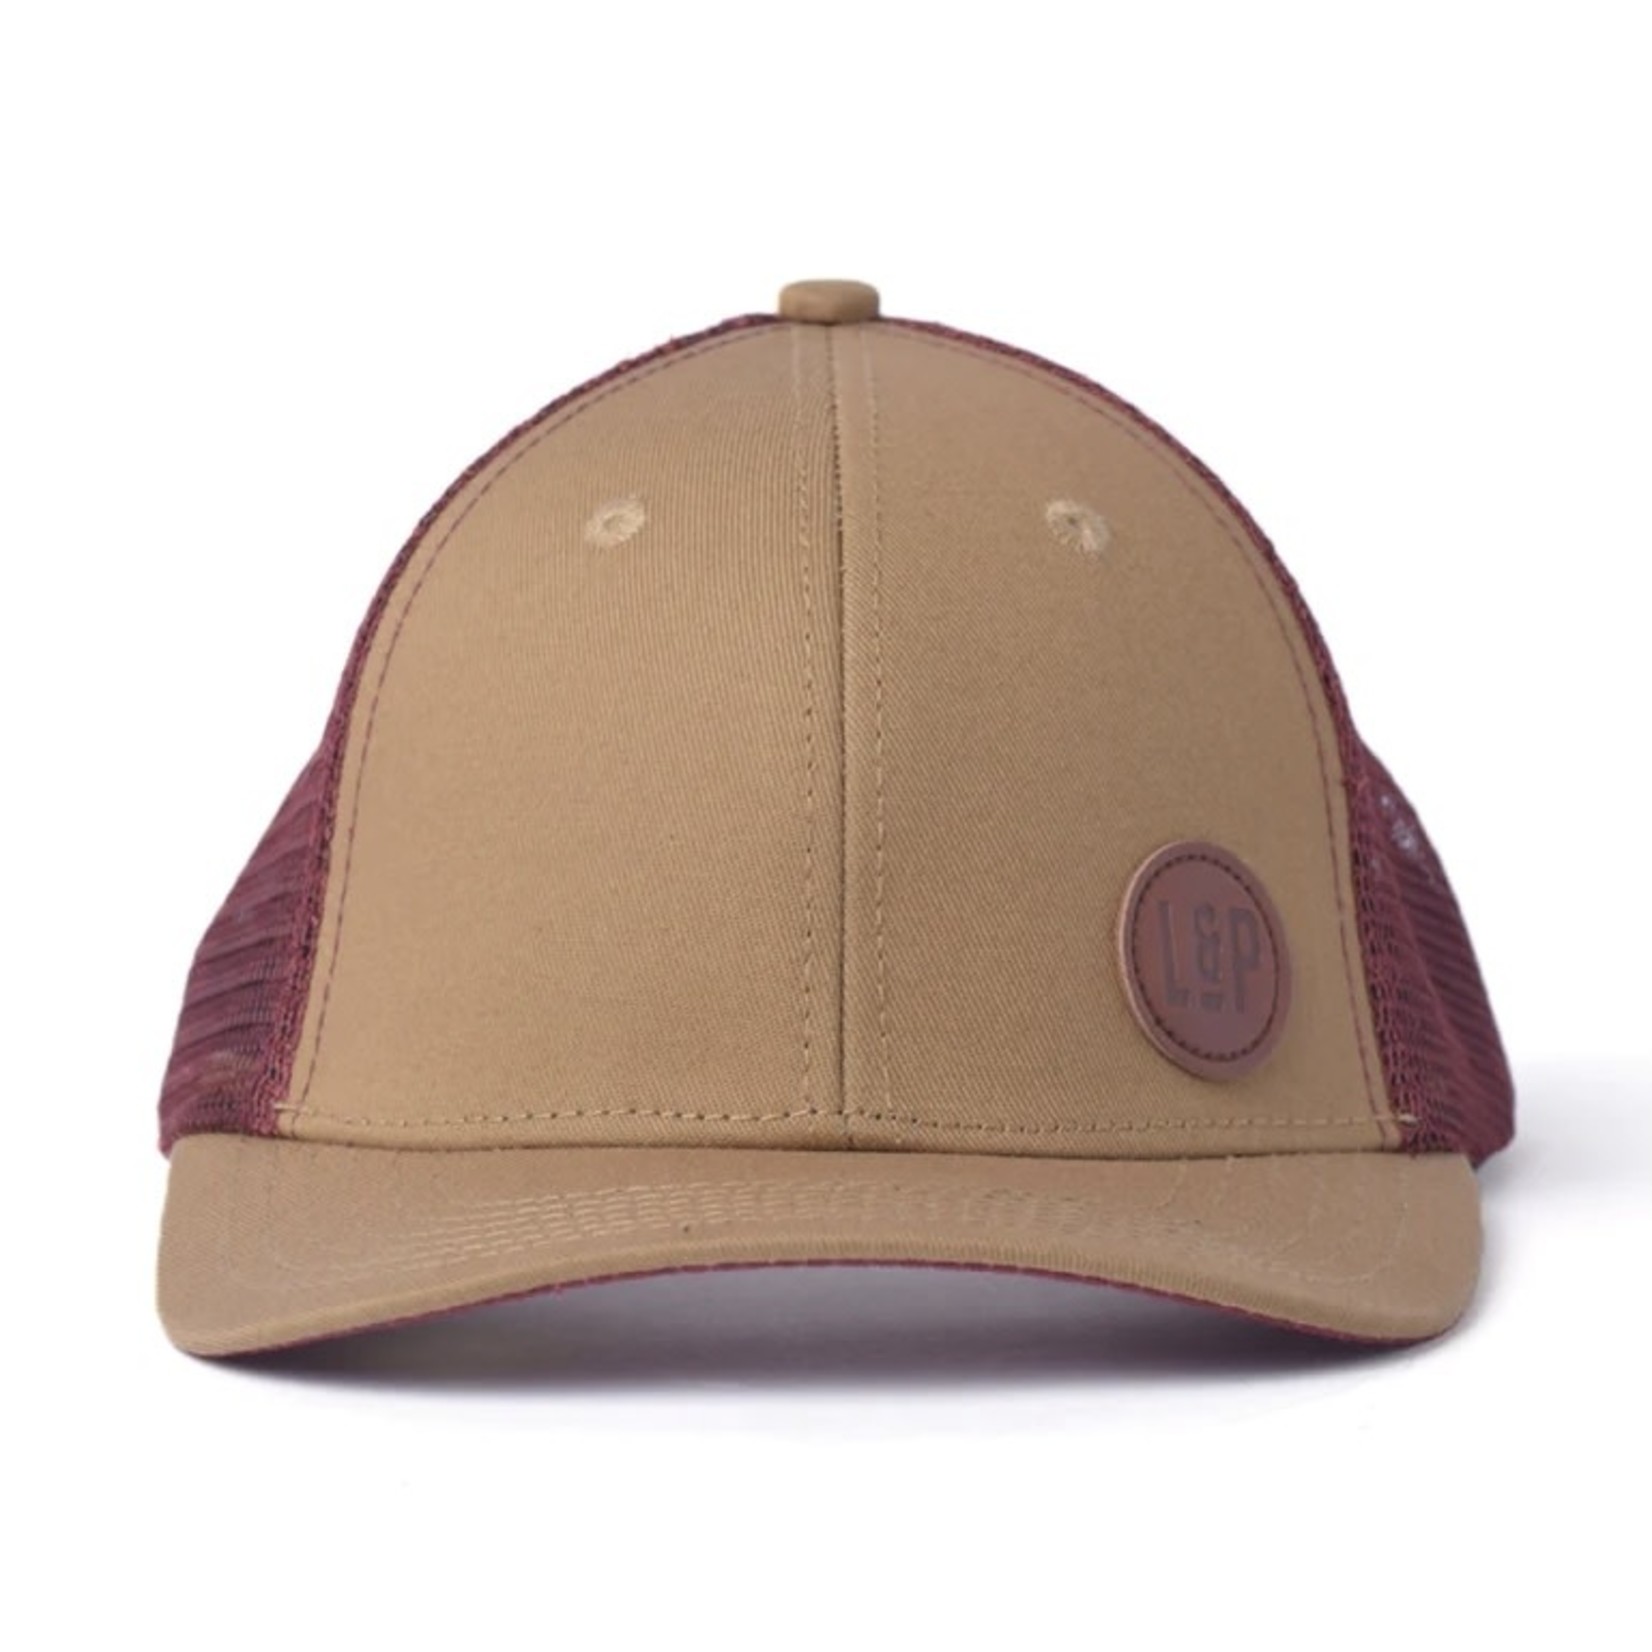 L&P Apparel L&P Apparel - Casquette Snapback Hat